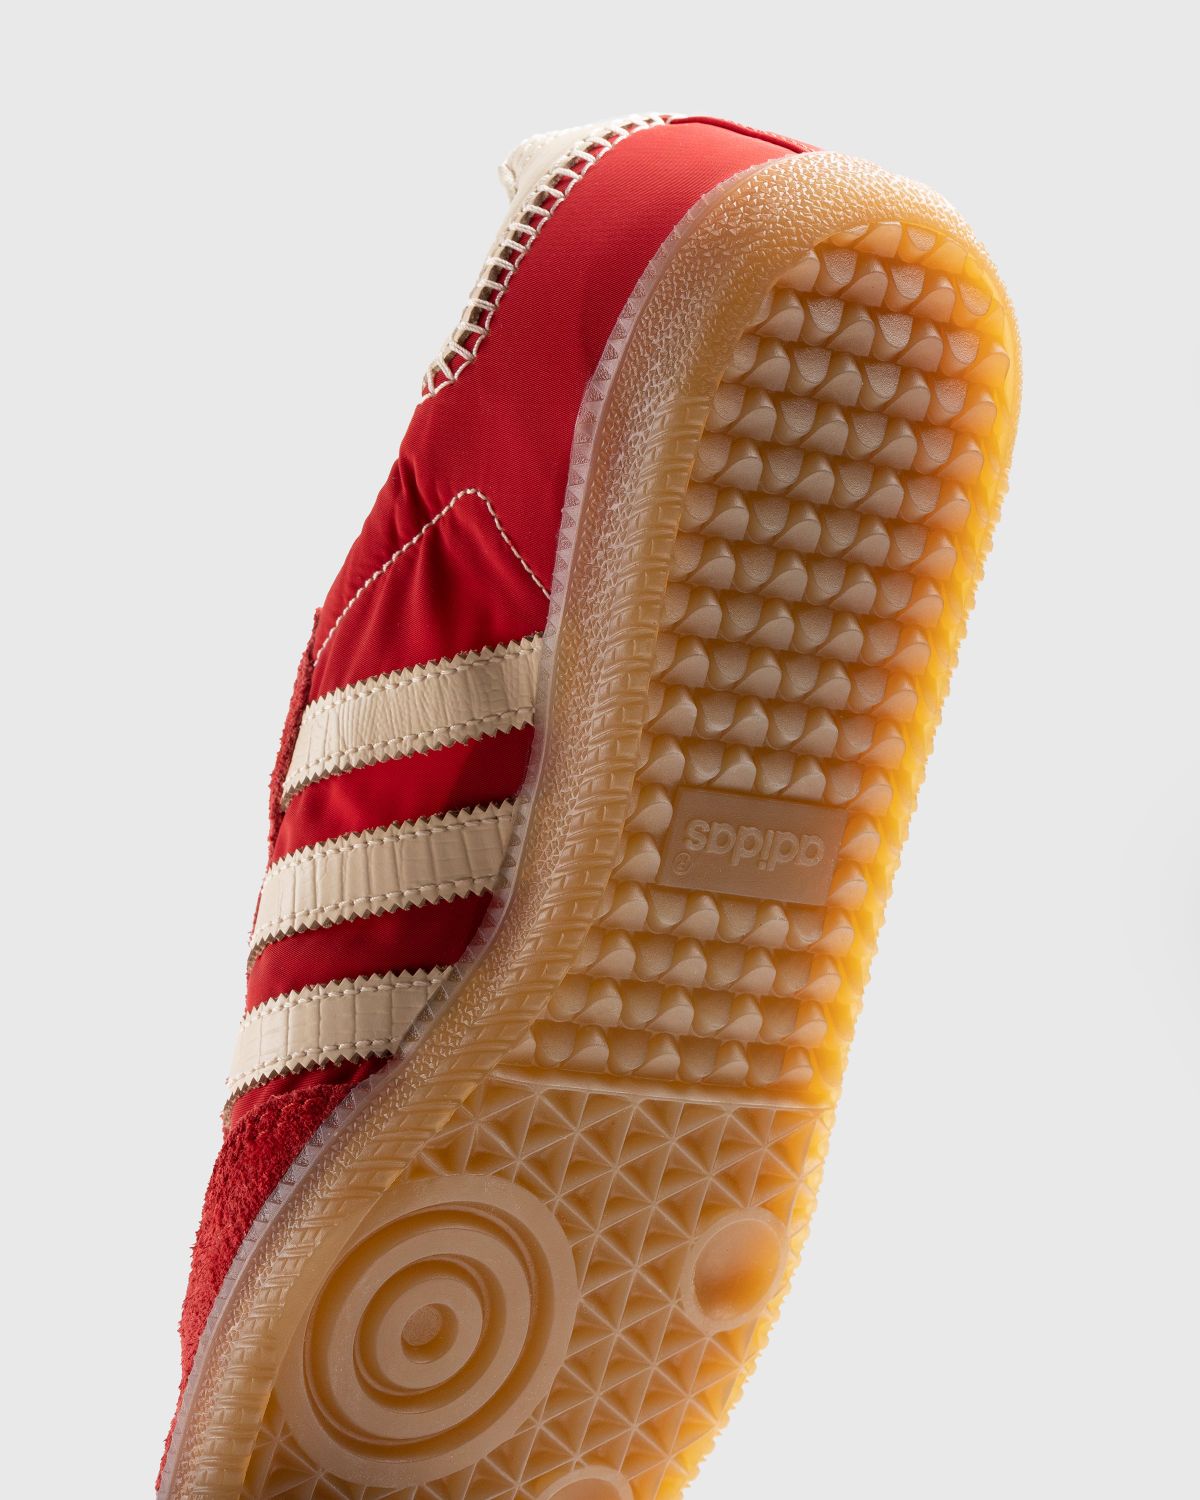 Adidas x Wales Bonner – WB Samba Scarlet/Ecru Tint/Scarlet - Low Top Sneakers - Red - Image 6